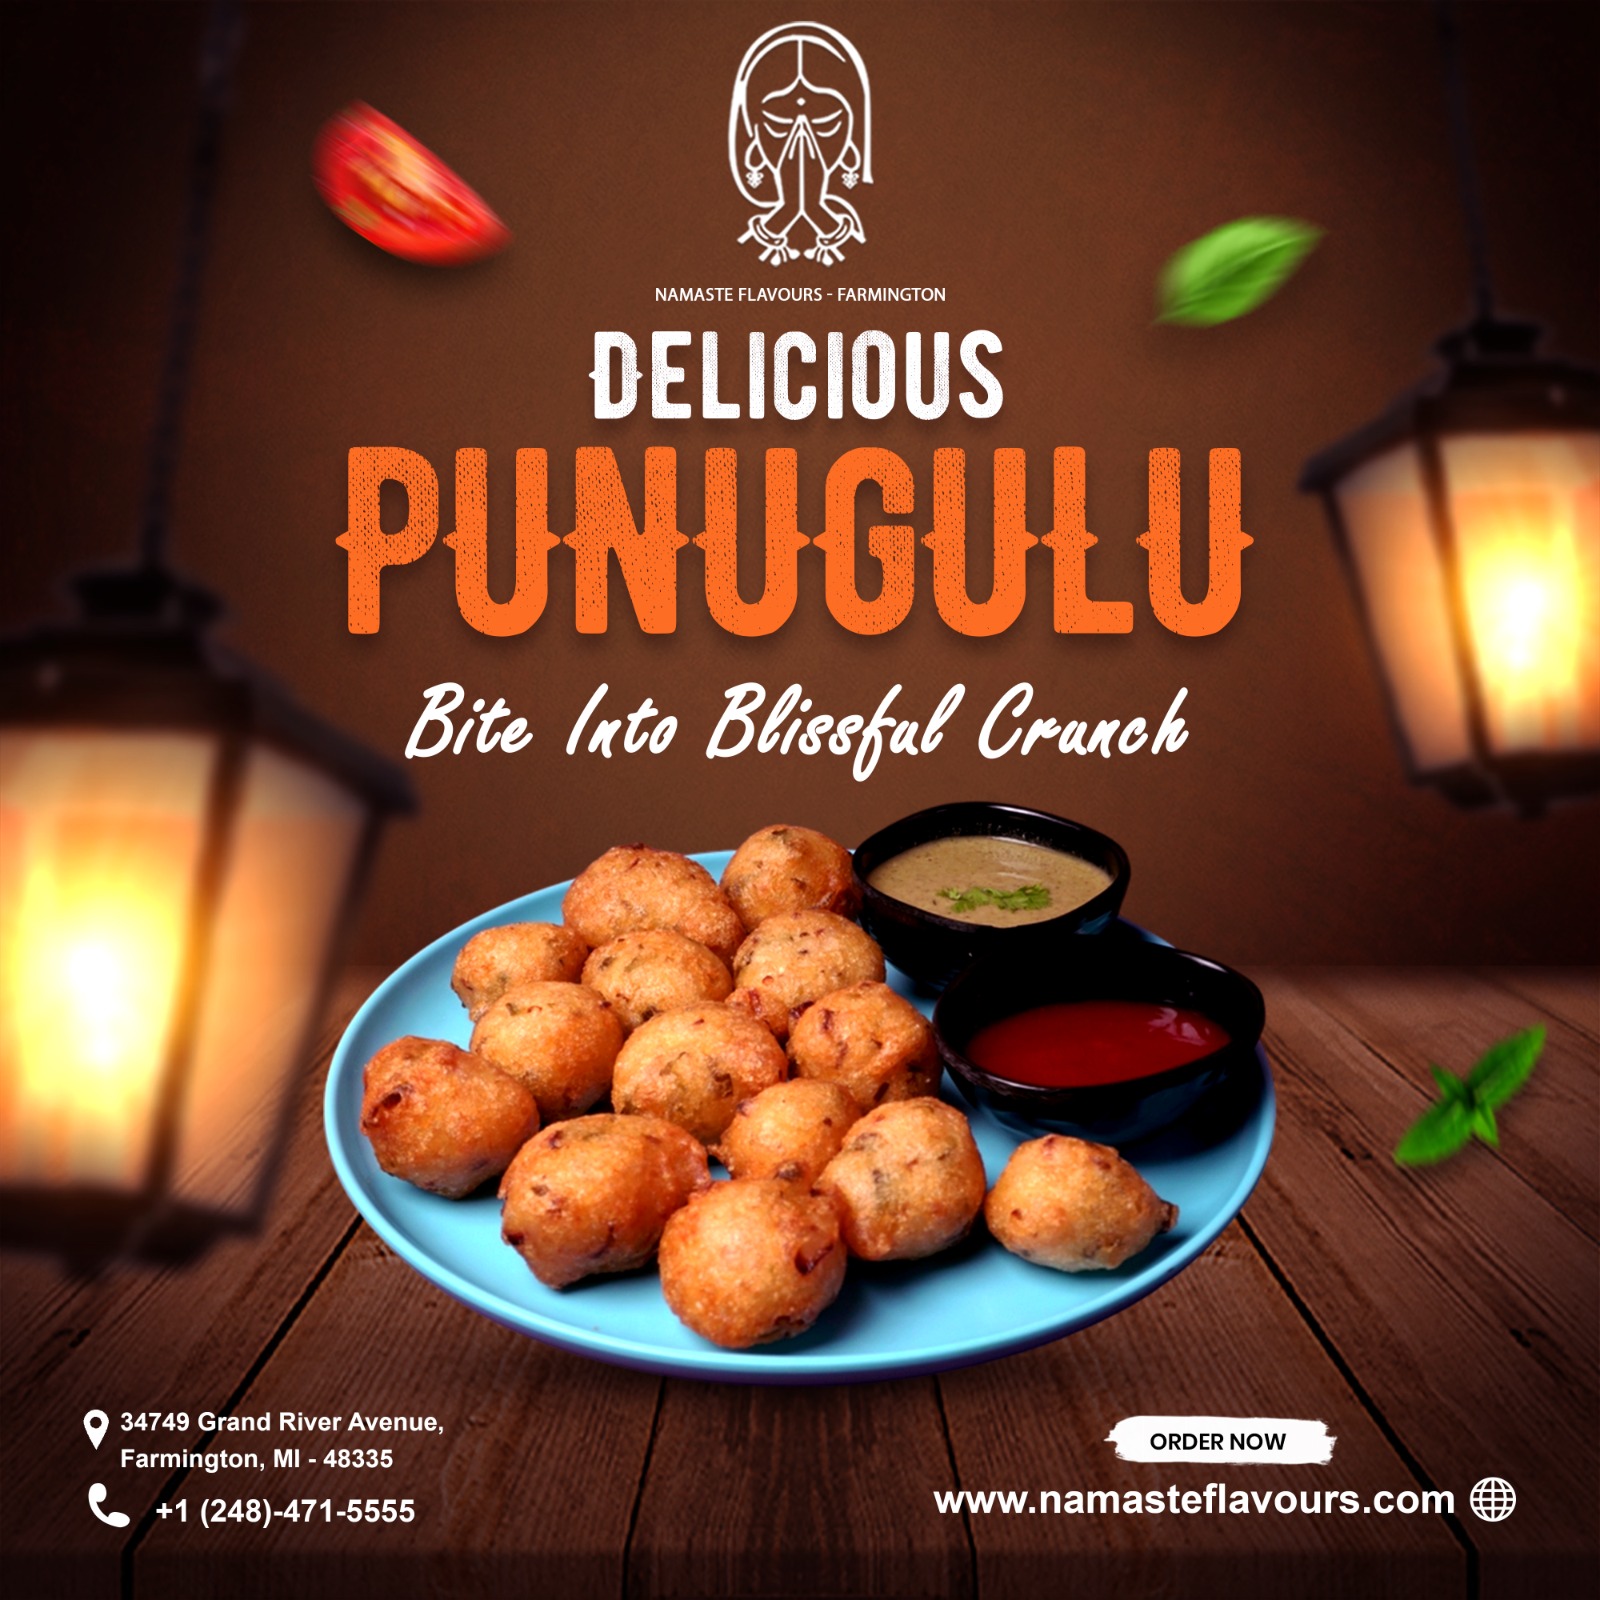 Enjoy the delectable crunch of Punugulu!